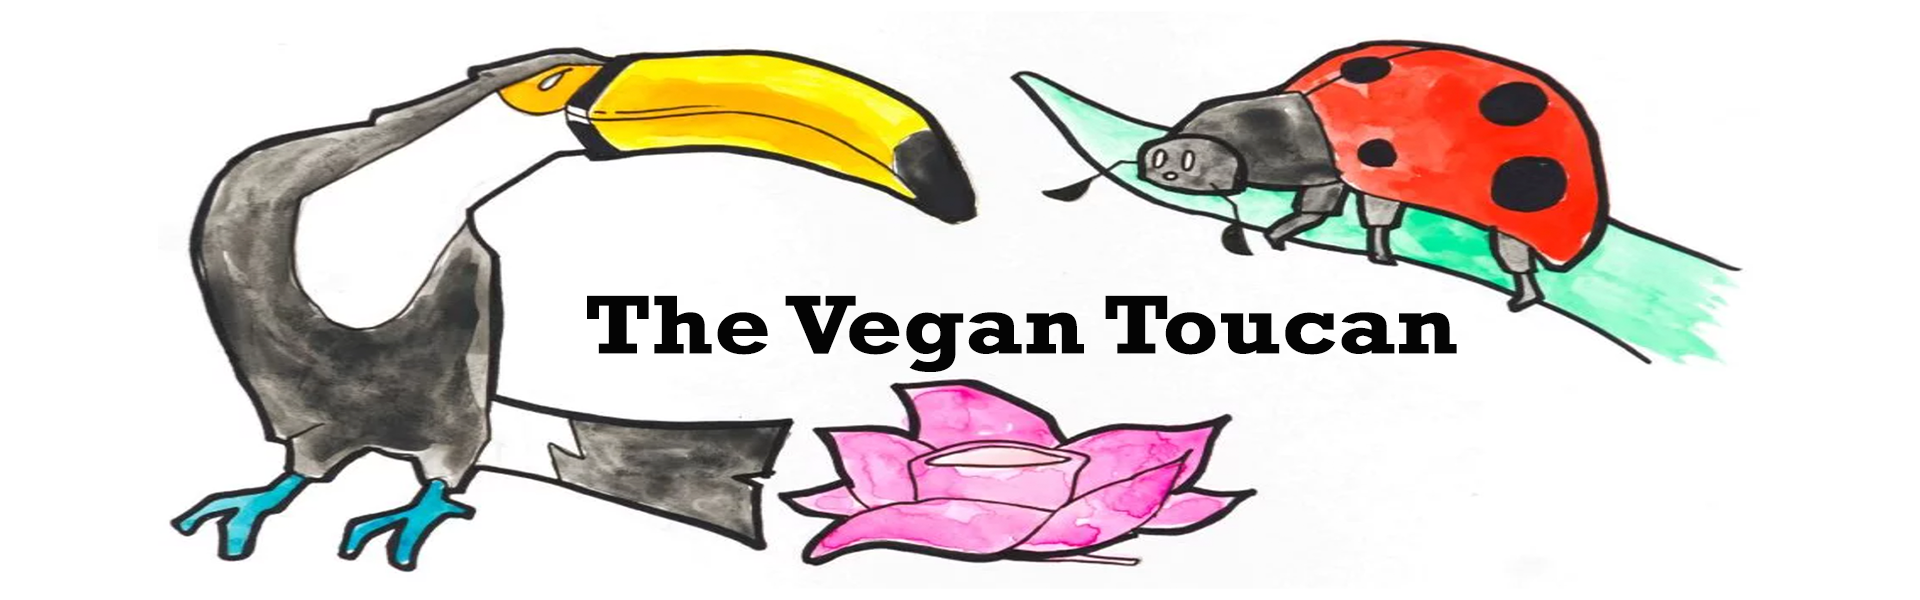 The Vegan Toucan